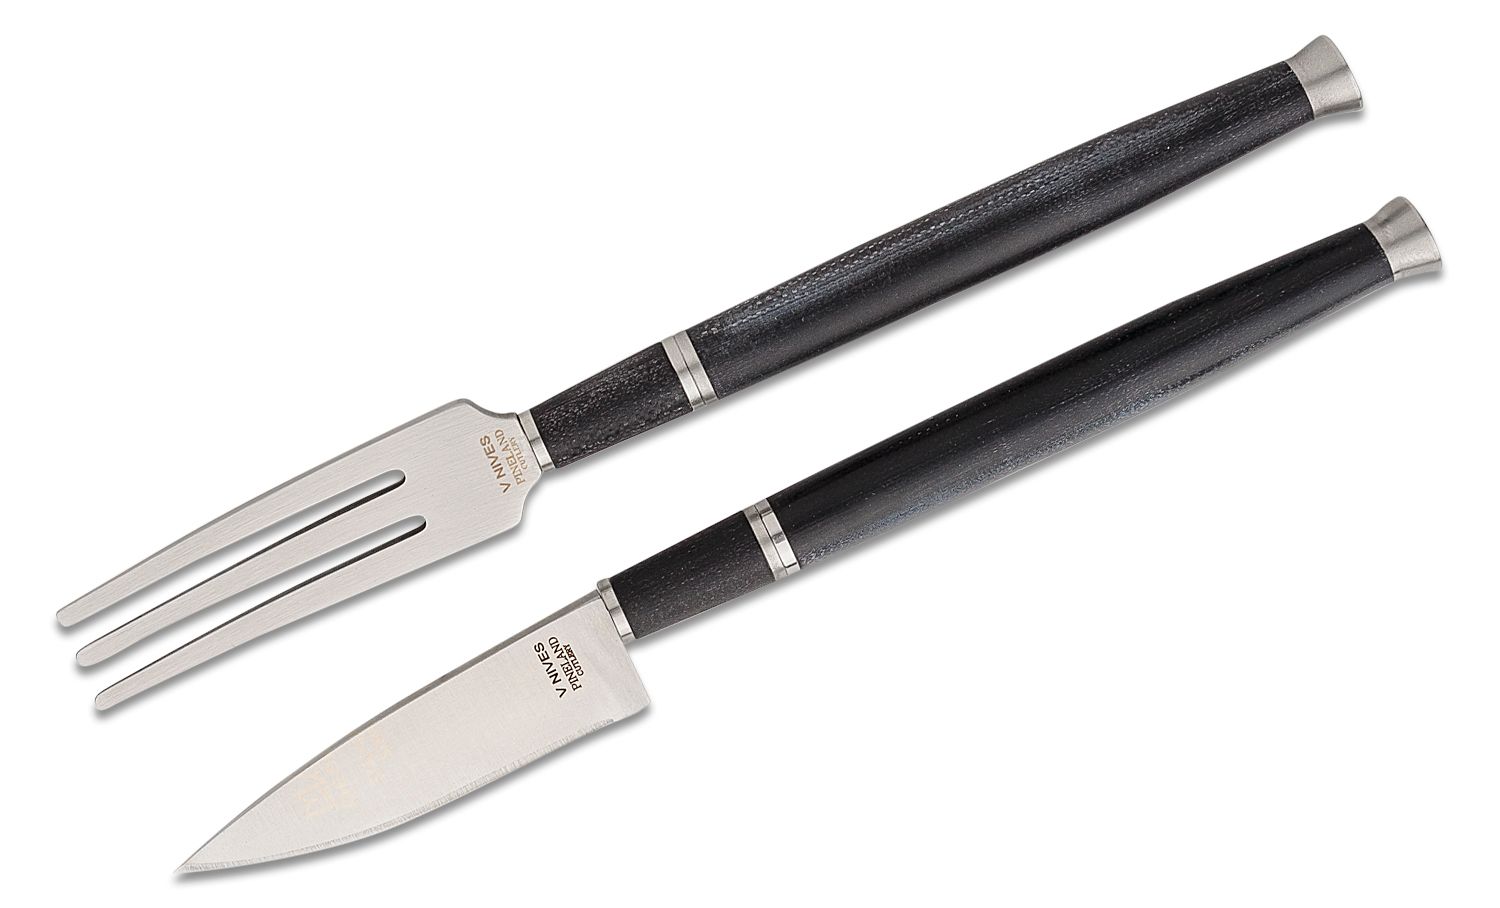 KNIFE CARE TOOLKIT - Pineland Cutlery, Inc dba SPARTAN BLADES